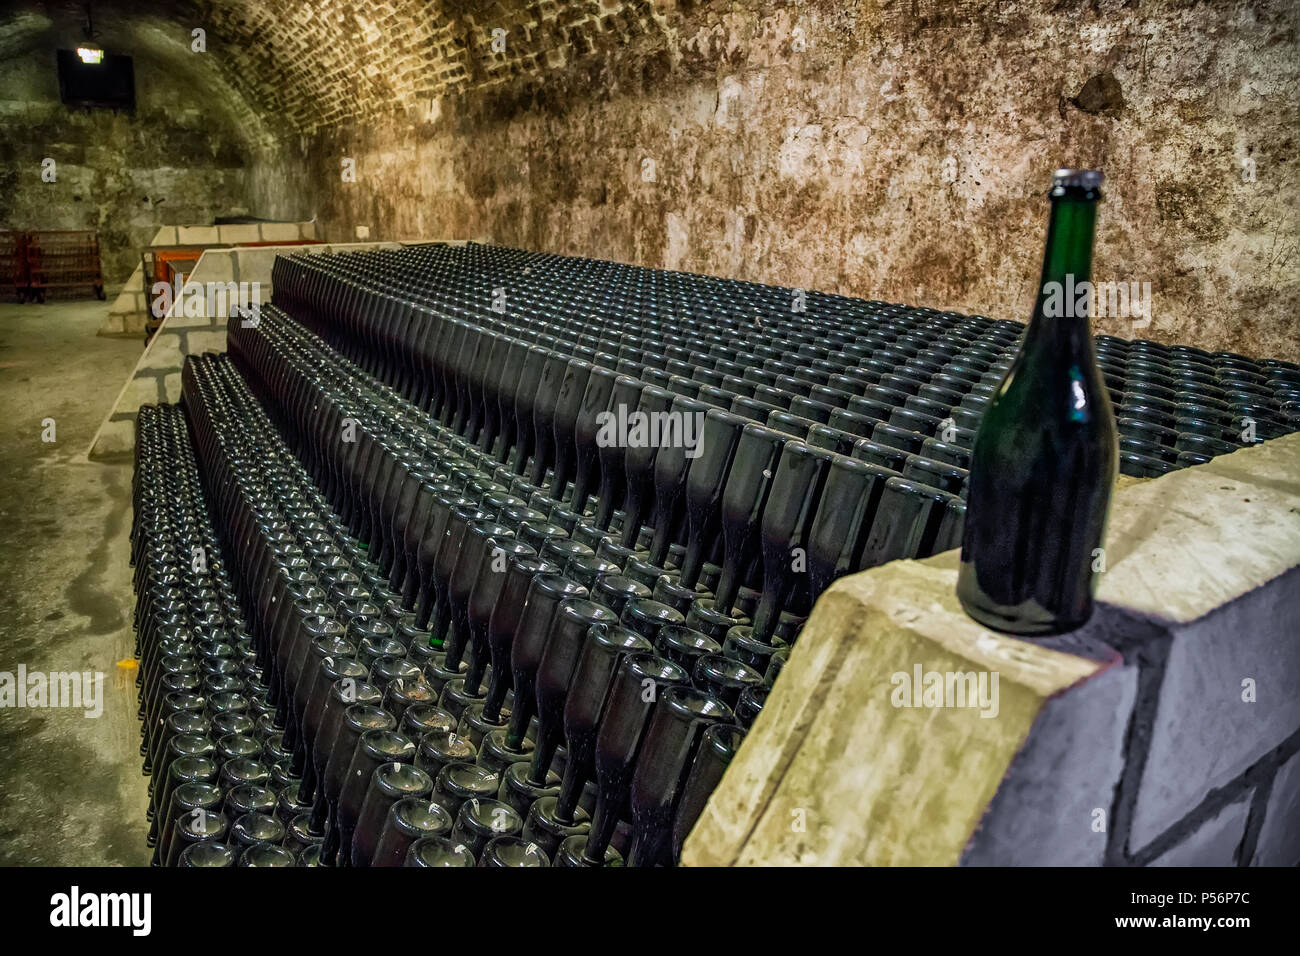 Cantina spumante di famosi ungherese Törley Champagne Factory.Törley vini spumanti risale a quasi 150 anni, produce 10-12 milioni bottl Foto Stock